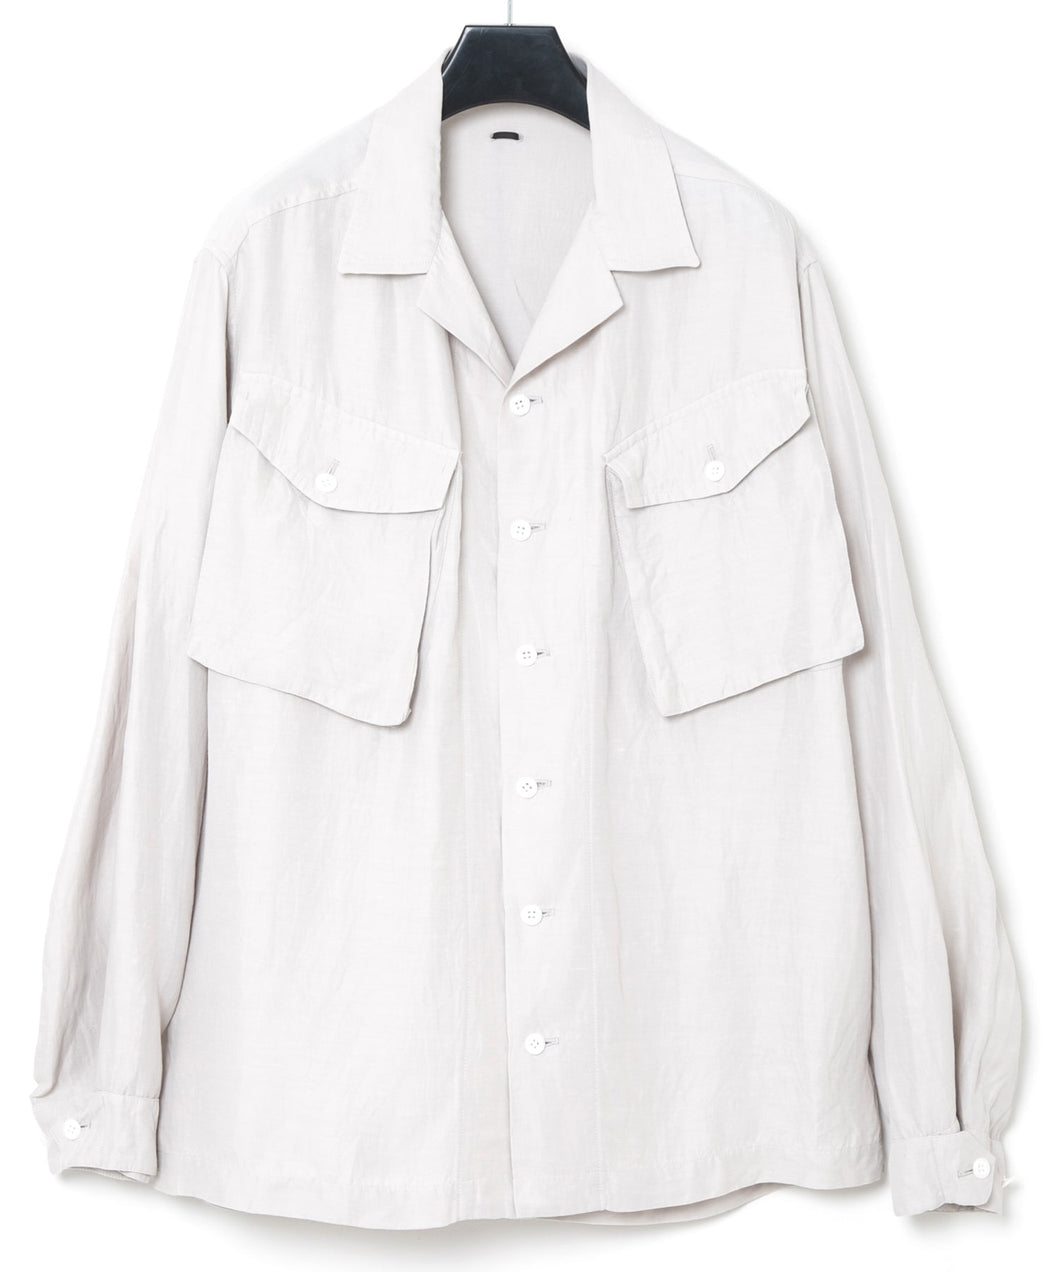 Washer Dyed Rayon&Linen Cloth Military Shirts Blouson - ASH